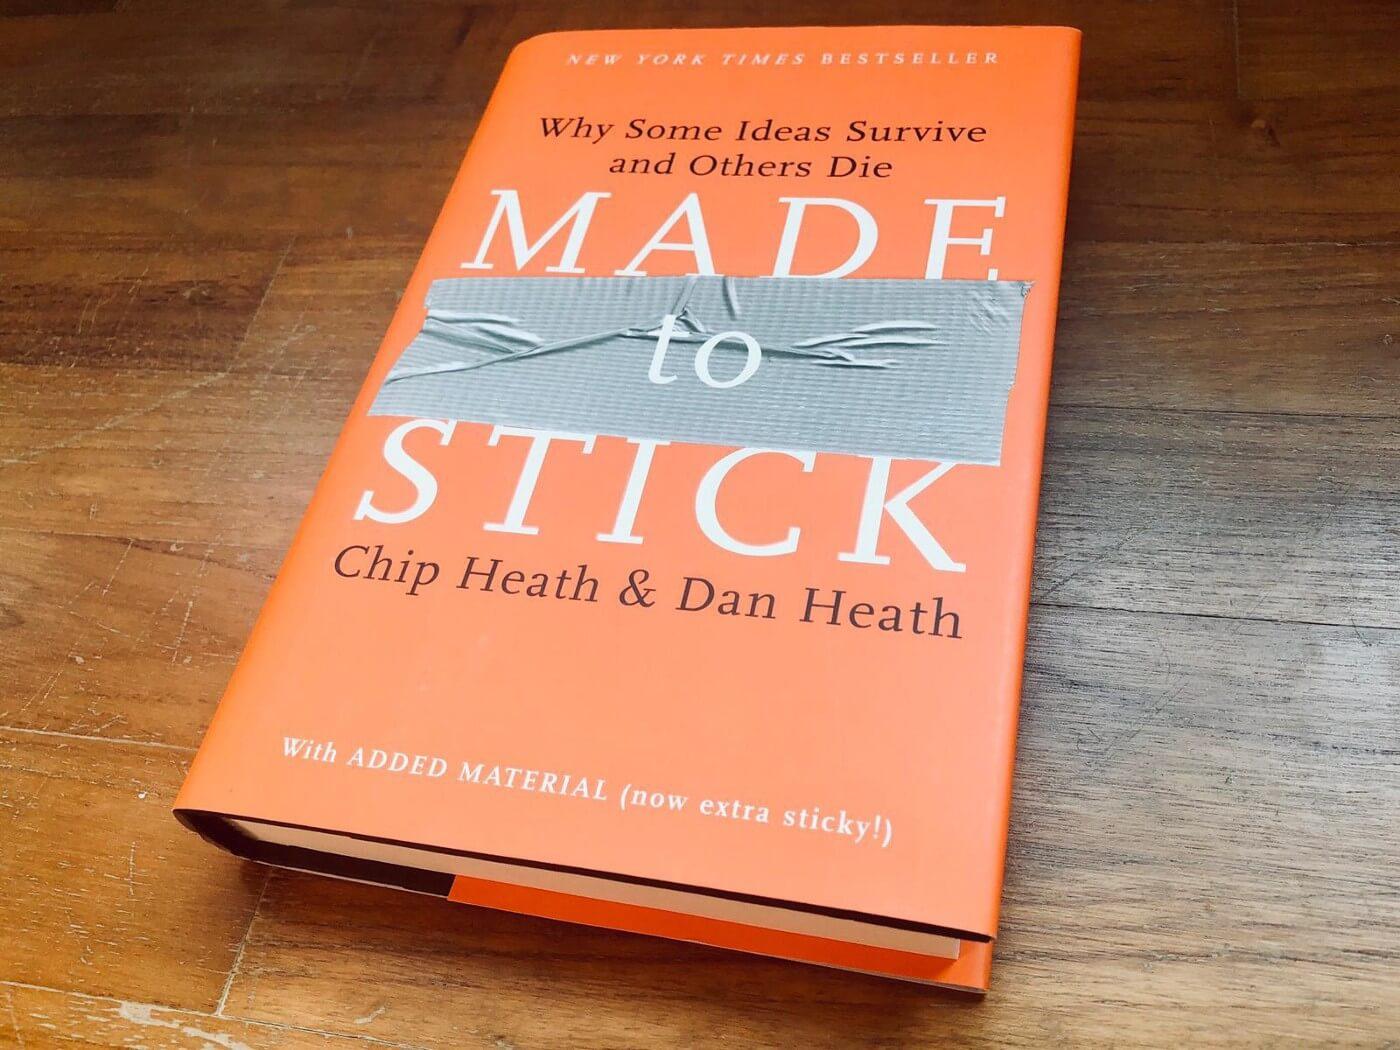 Book cover of Chip Heath & Dan Heath's "Made To Stick"